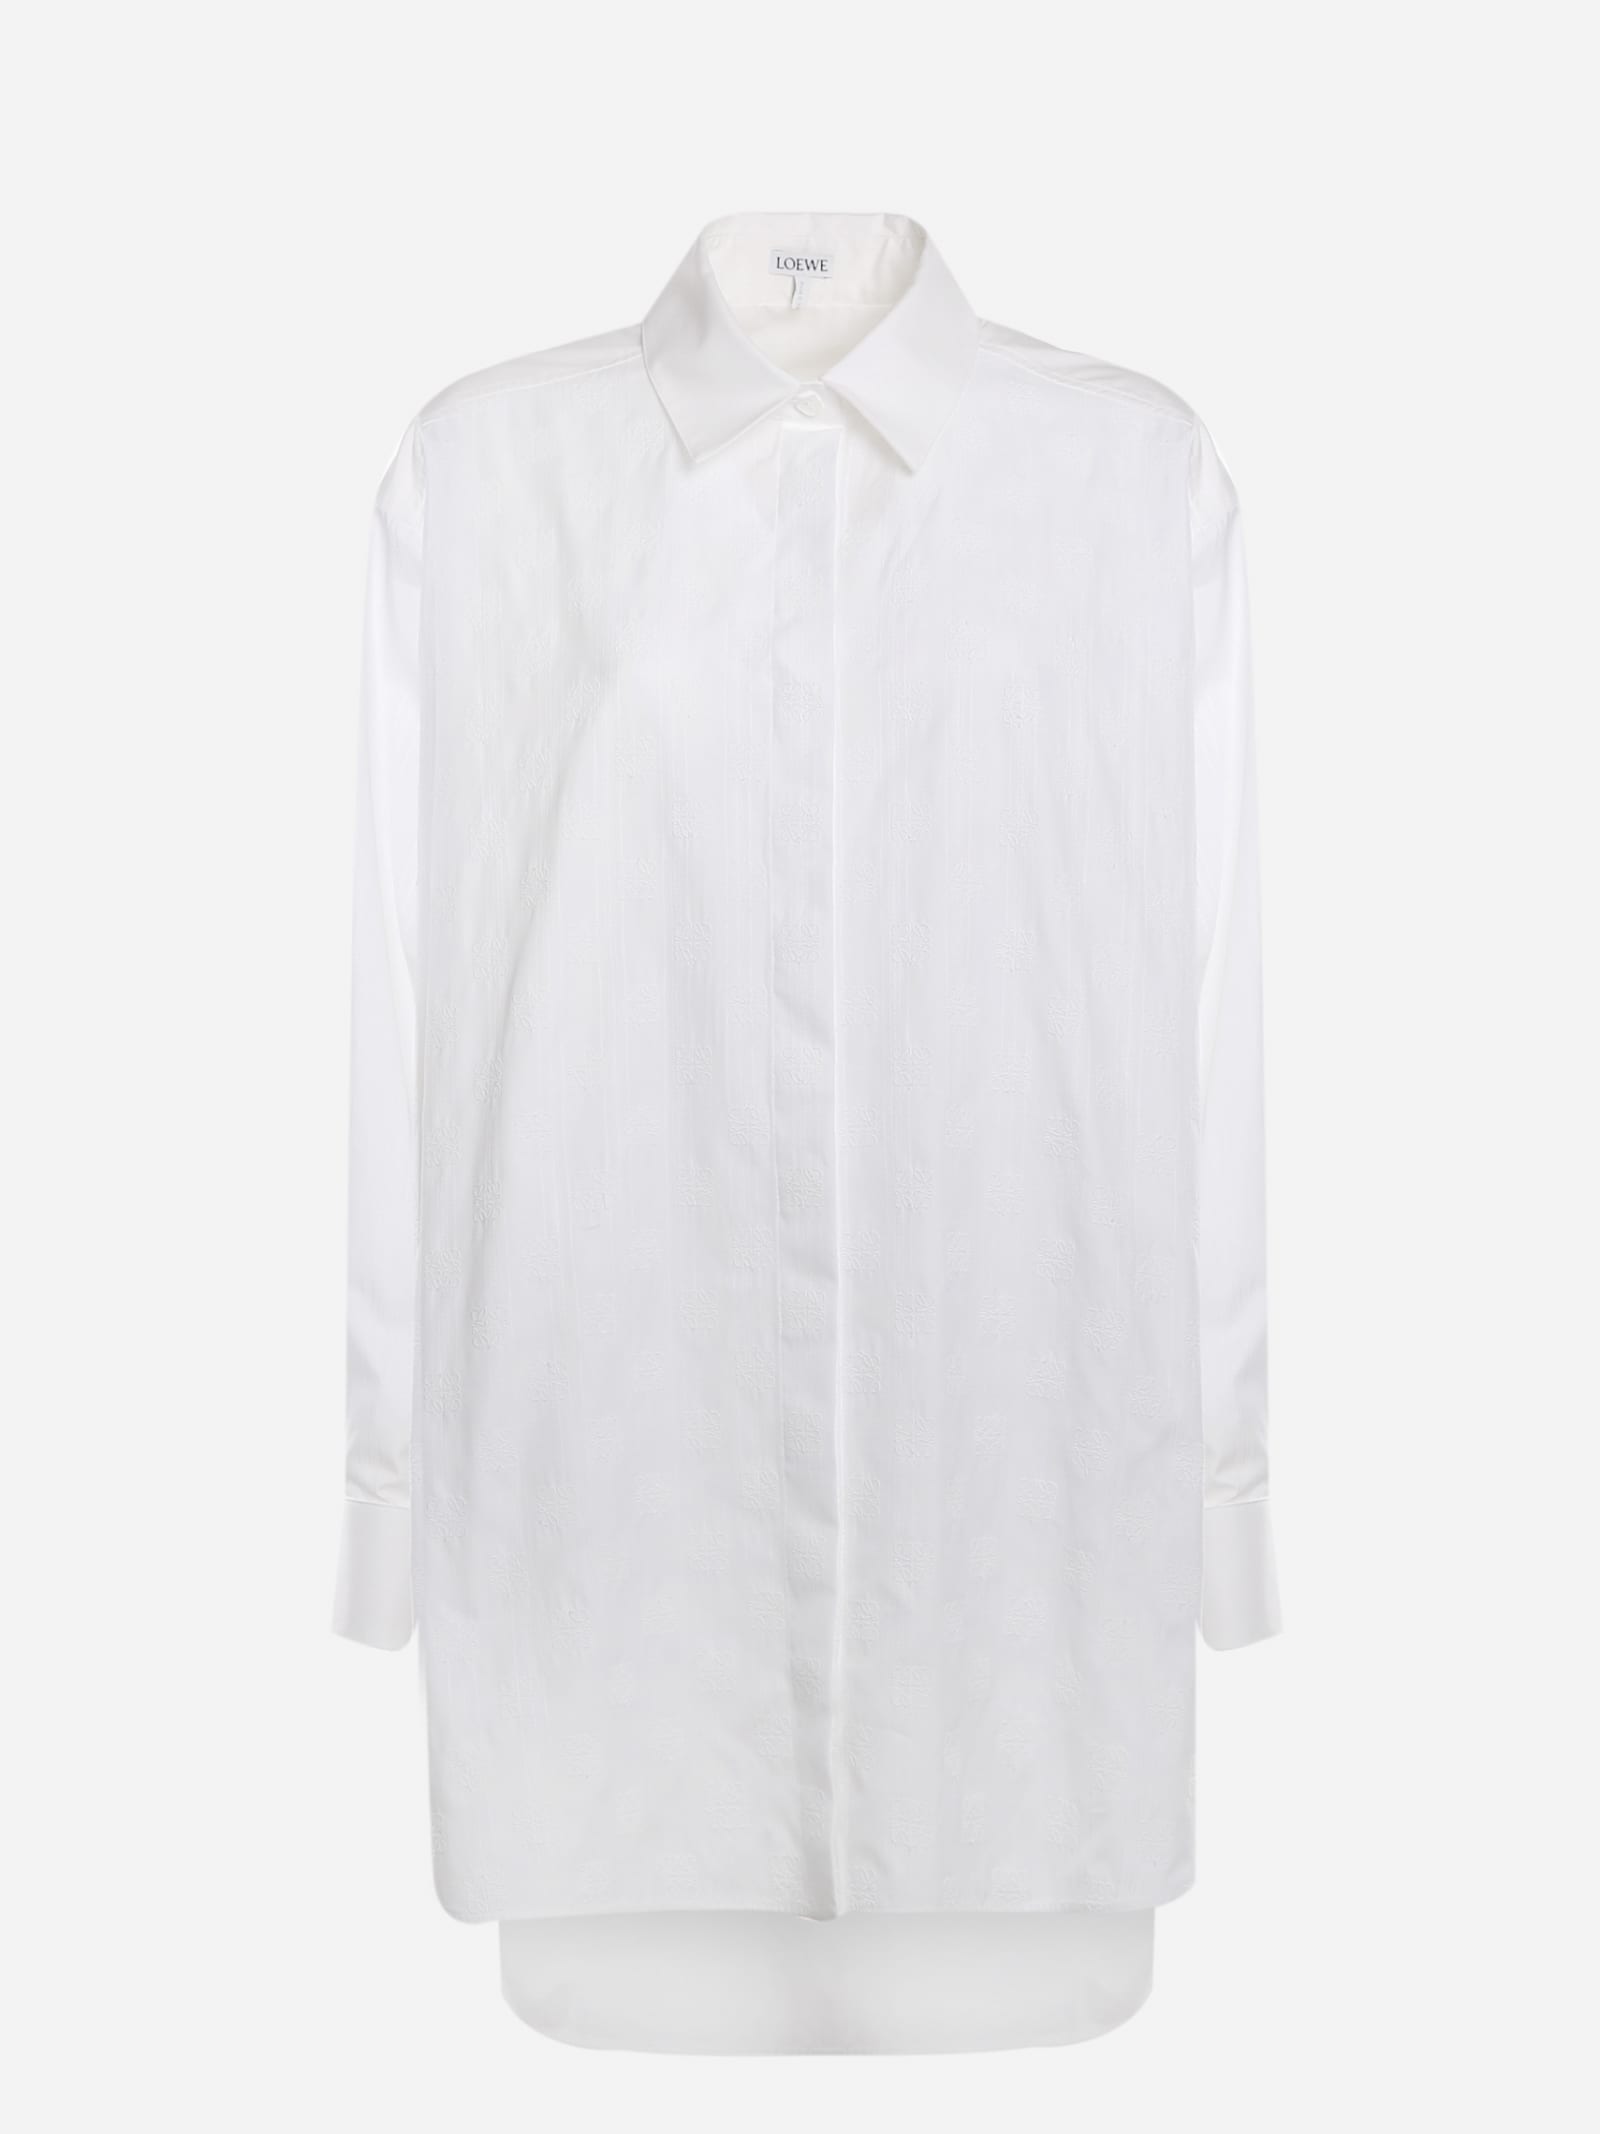 Loewe Anagram Oversized Cotton Shirt